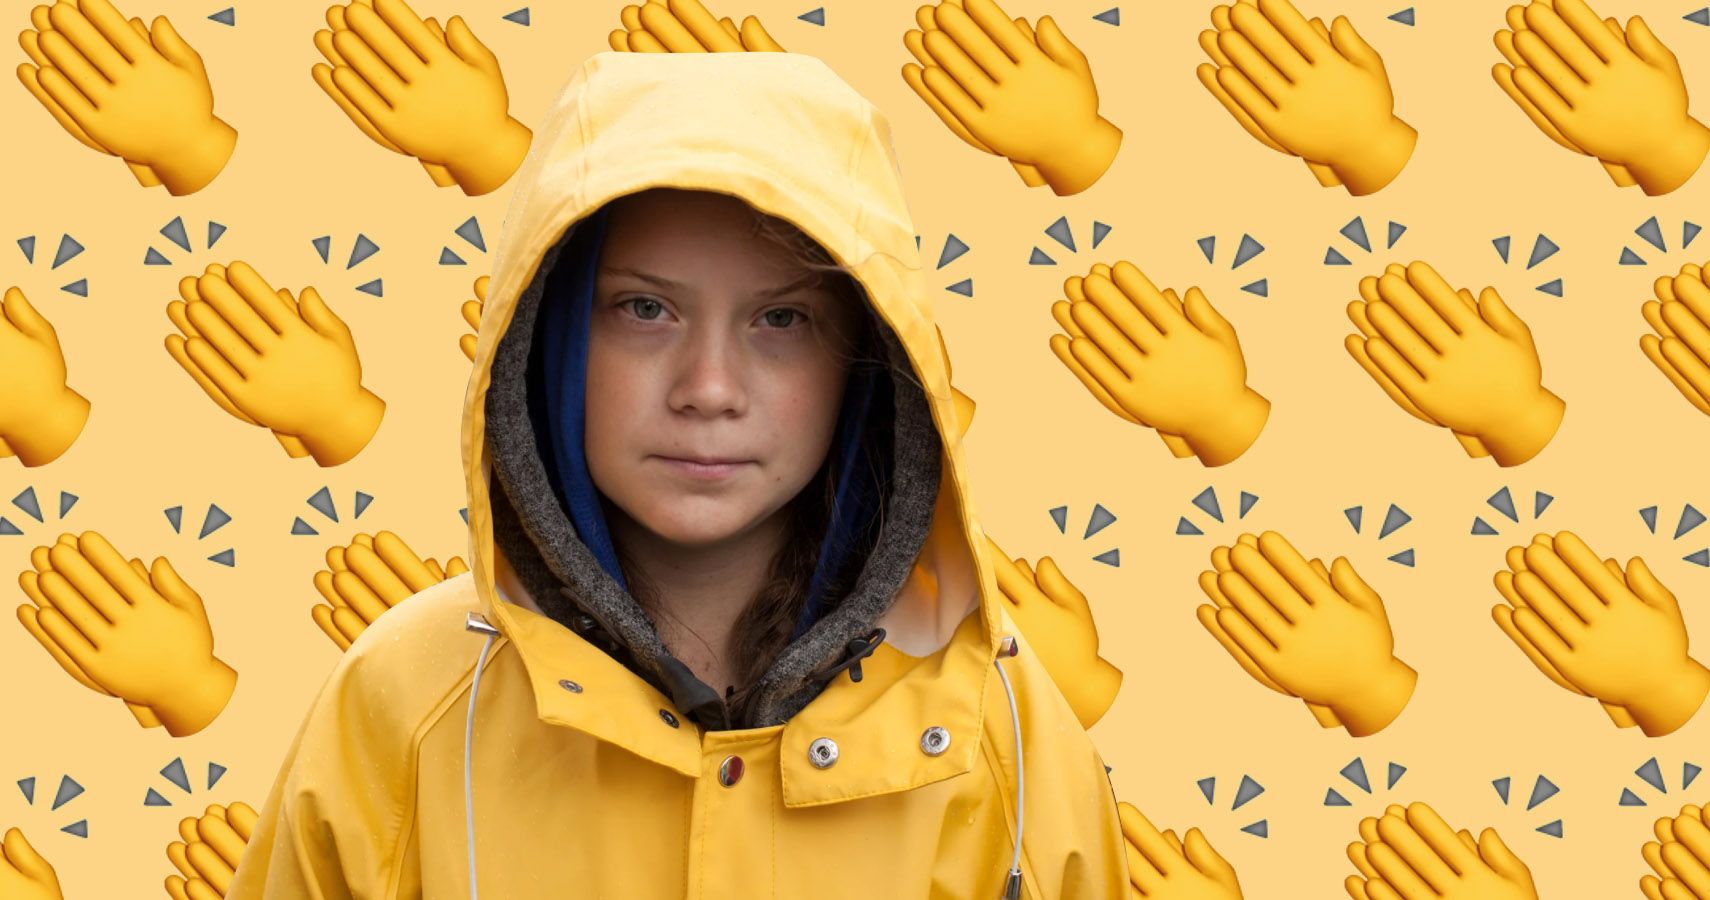 Greta Thunberg Claps Back On Environmental "Beliefs"